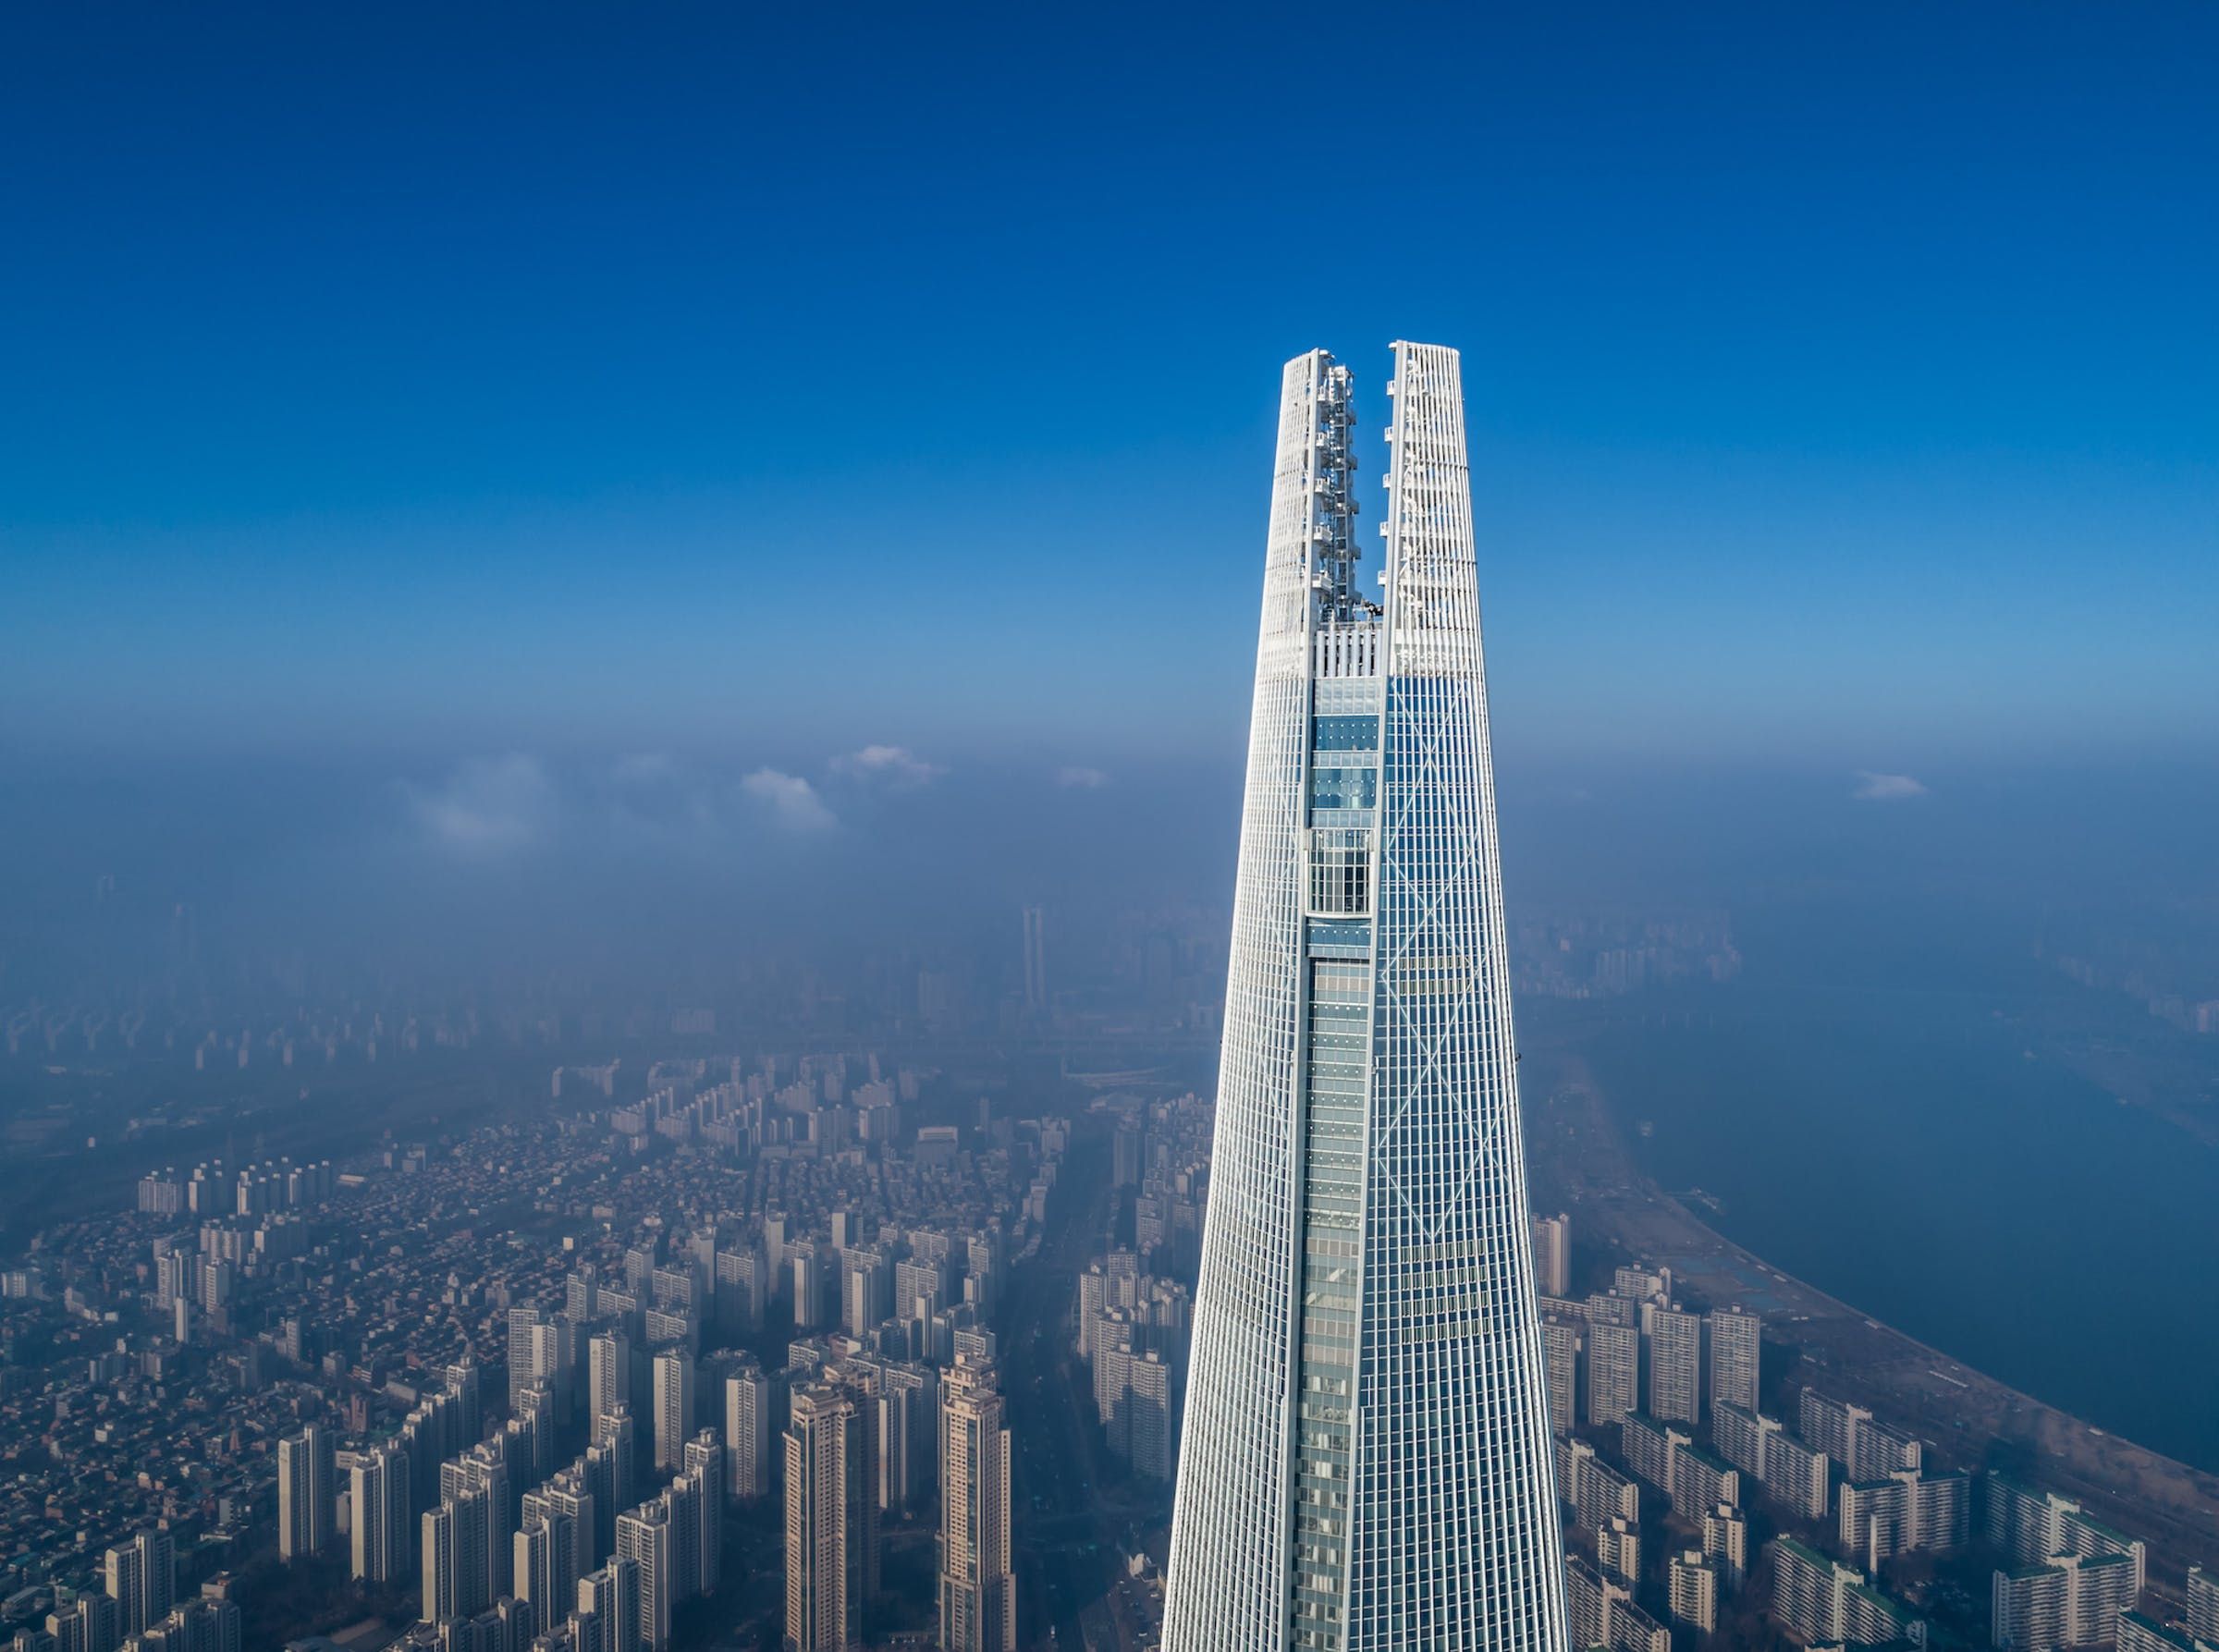 Kohn Pederson Fox Associates' Lotte World Tower in South Korea